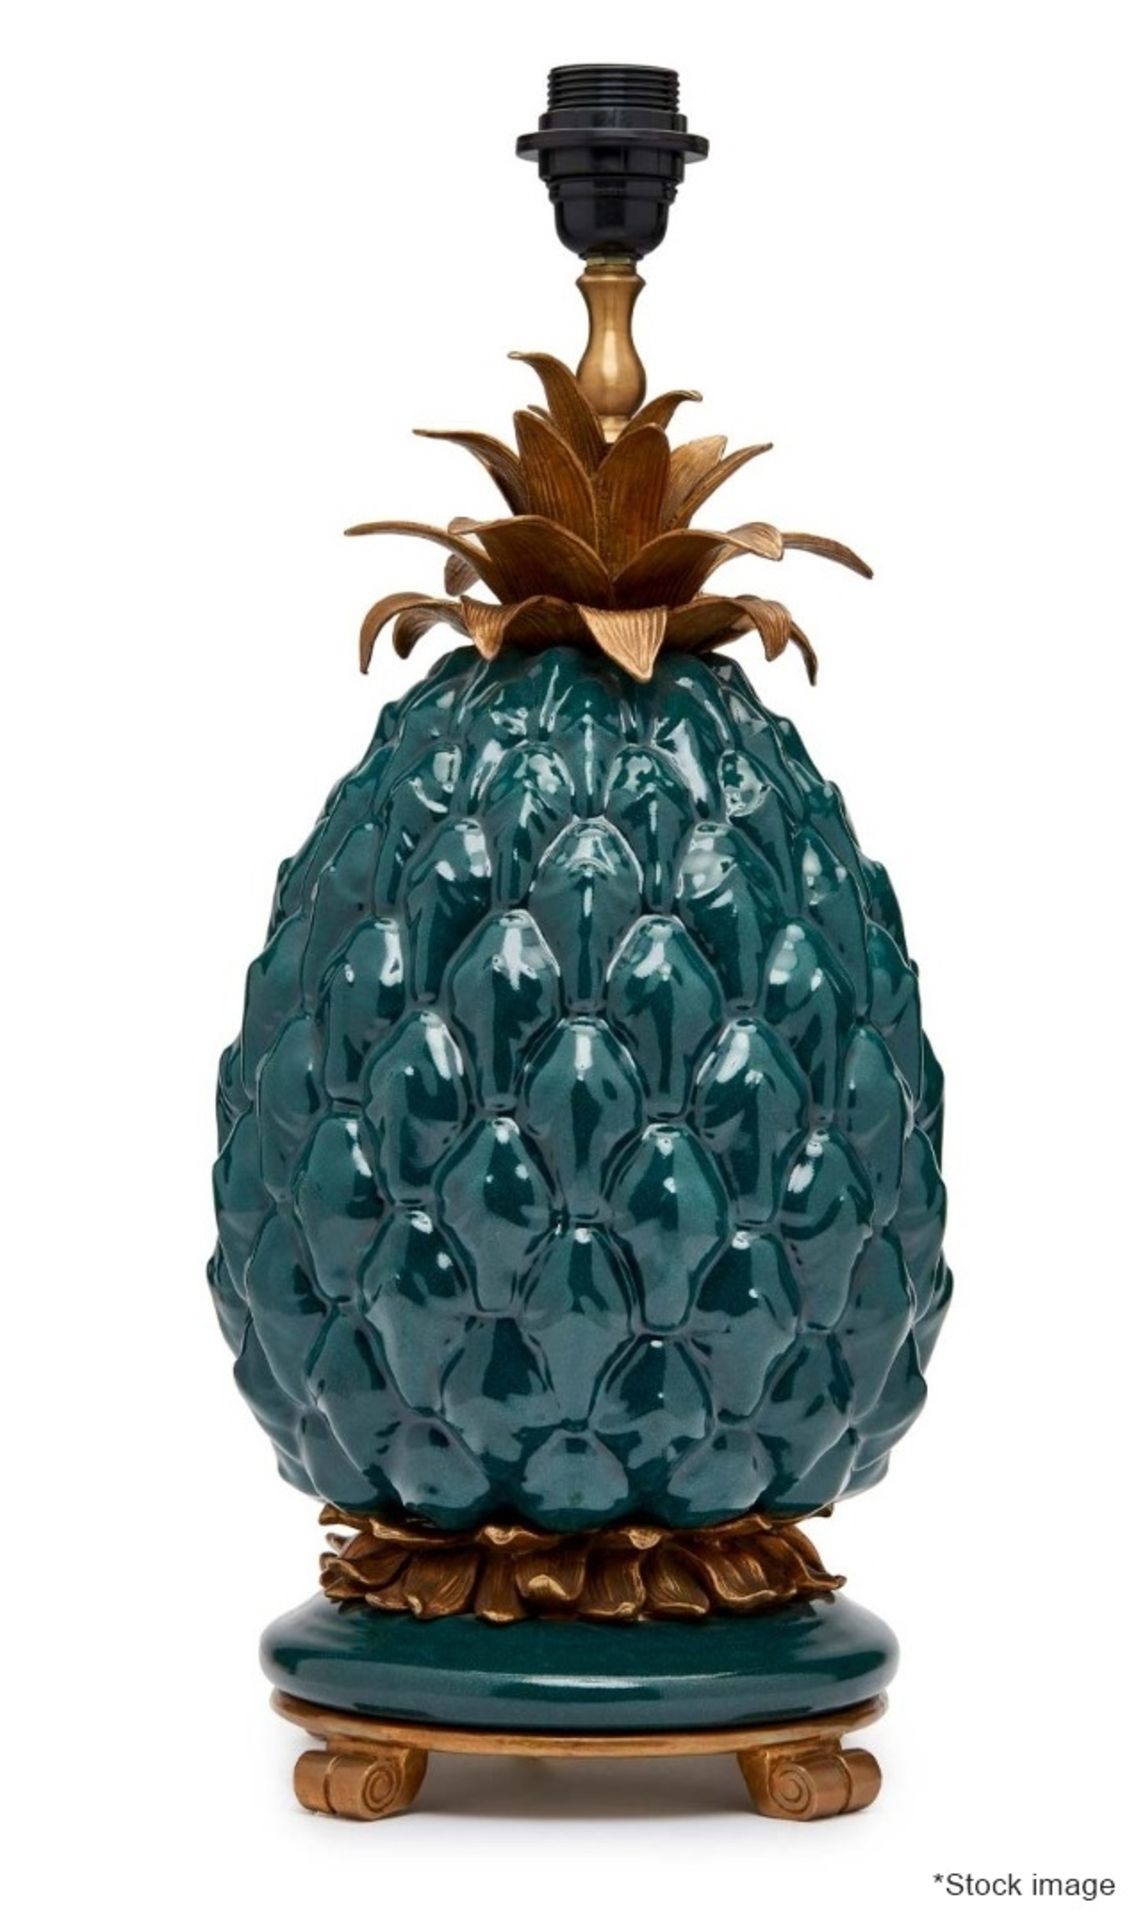 1 x HOUSE OF HACKNEY 'Ananas' Ceramic Pineapple Lamp Stand Petrol - Original RRP £545.00 - Ref: - Image 2 of 7